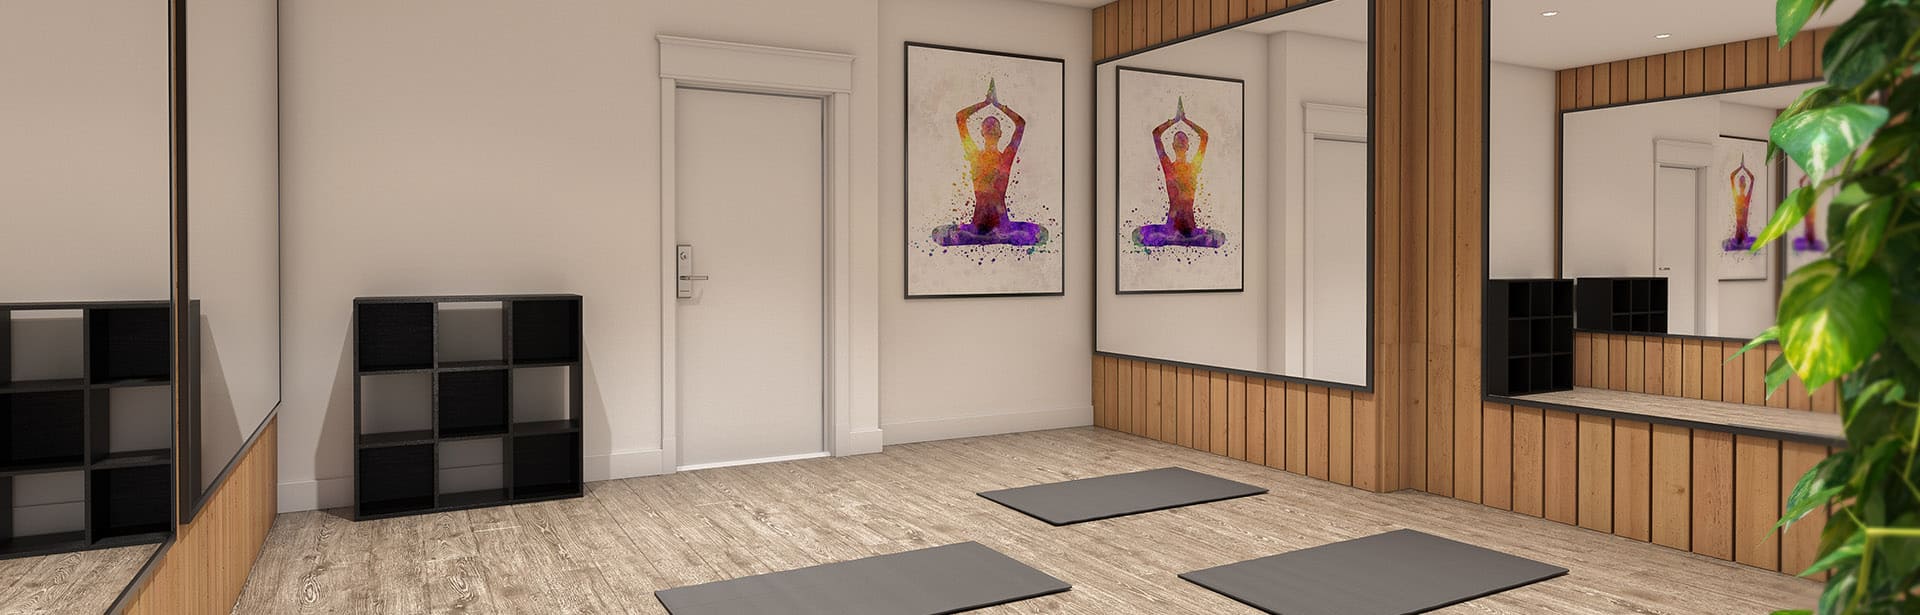 Case Study: Yoga Studio 3d Rendering by Archviztech